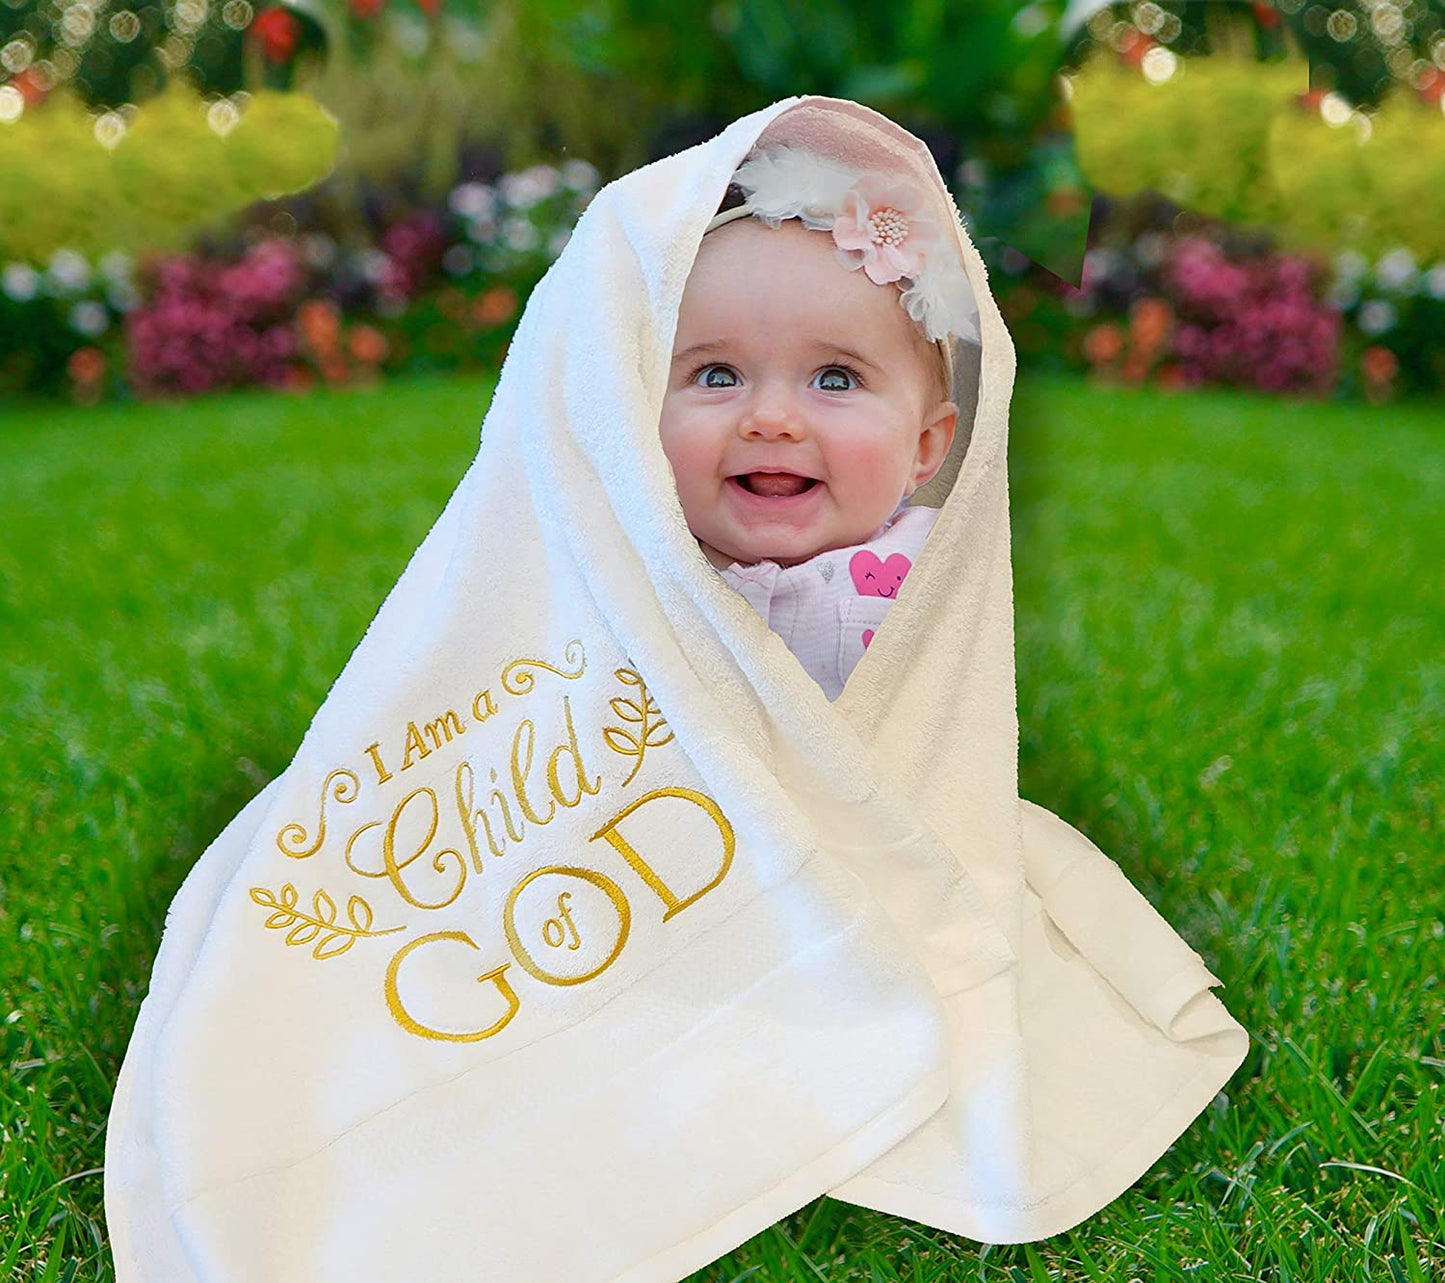 I Am A Child of God Embroidered Soft Large White Towel - Baptism Gift